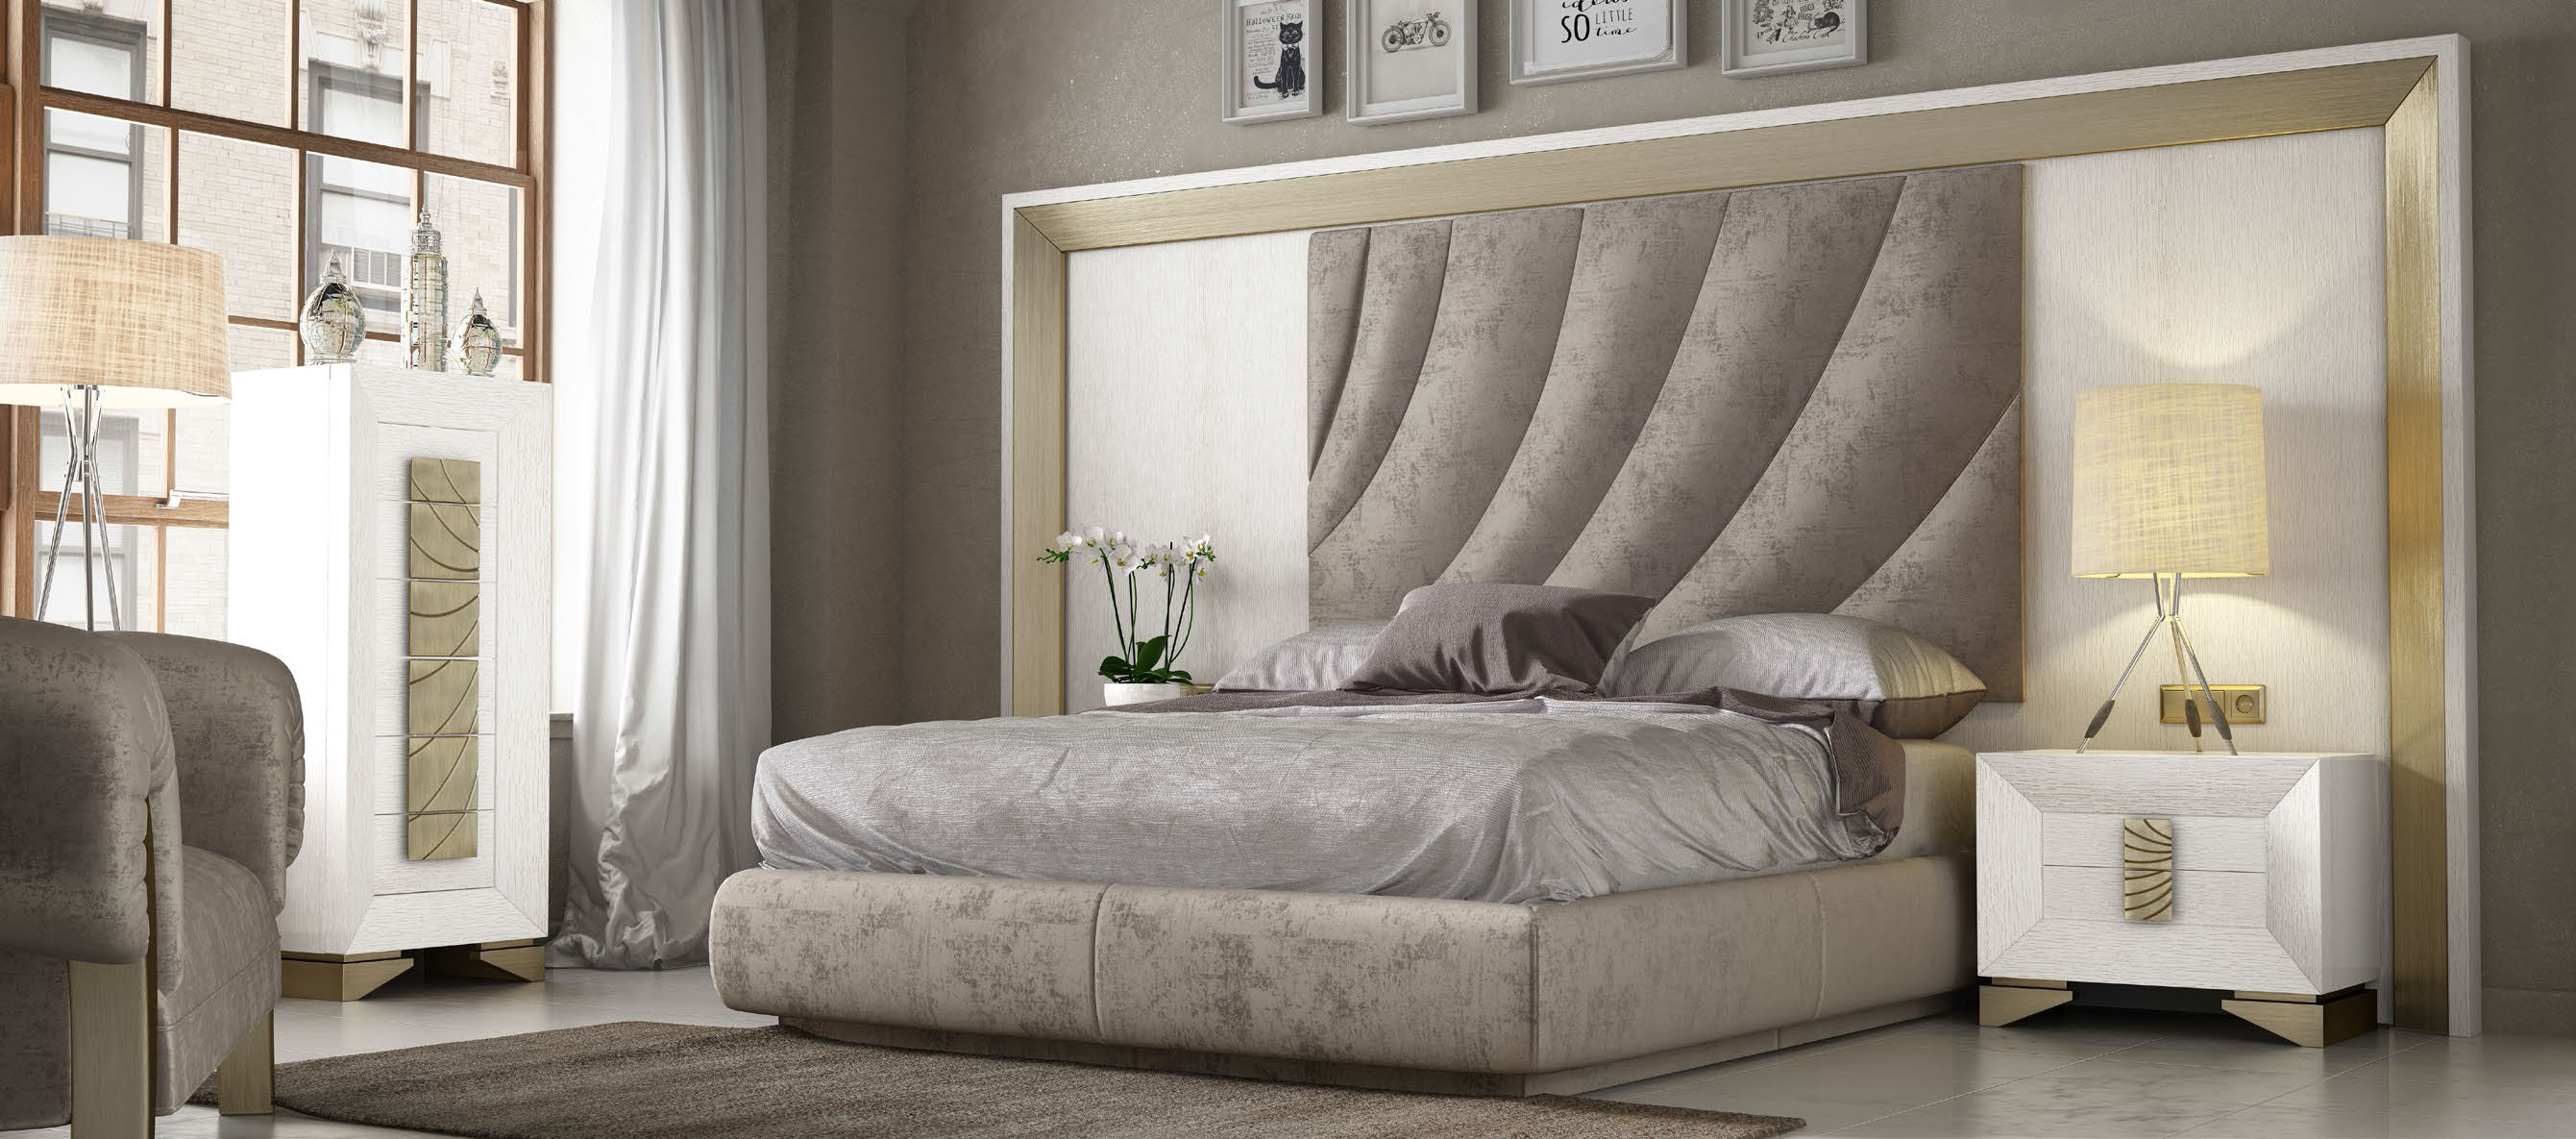 Brands Franco Furniture Bedrooms vol1, Spain DOR 128